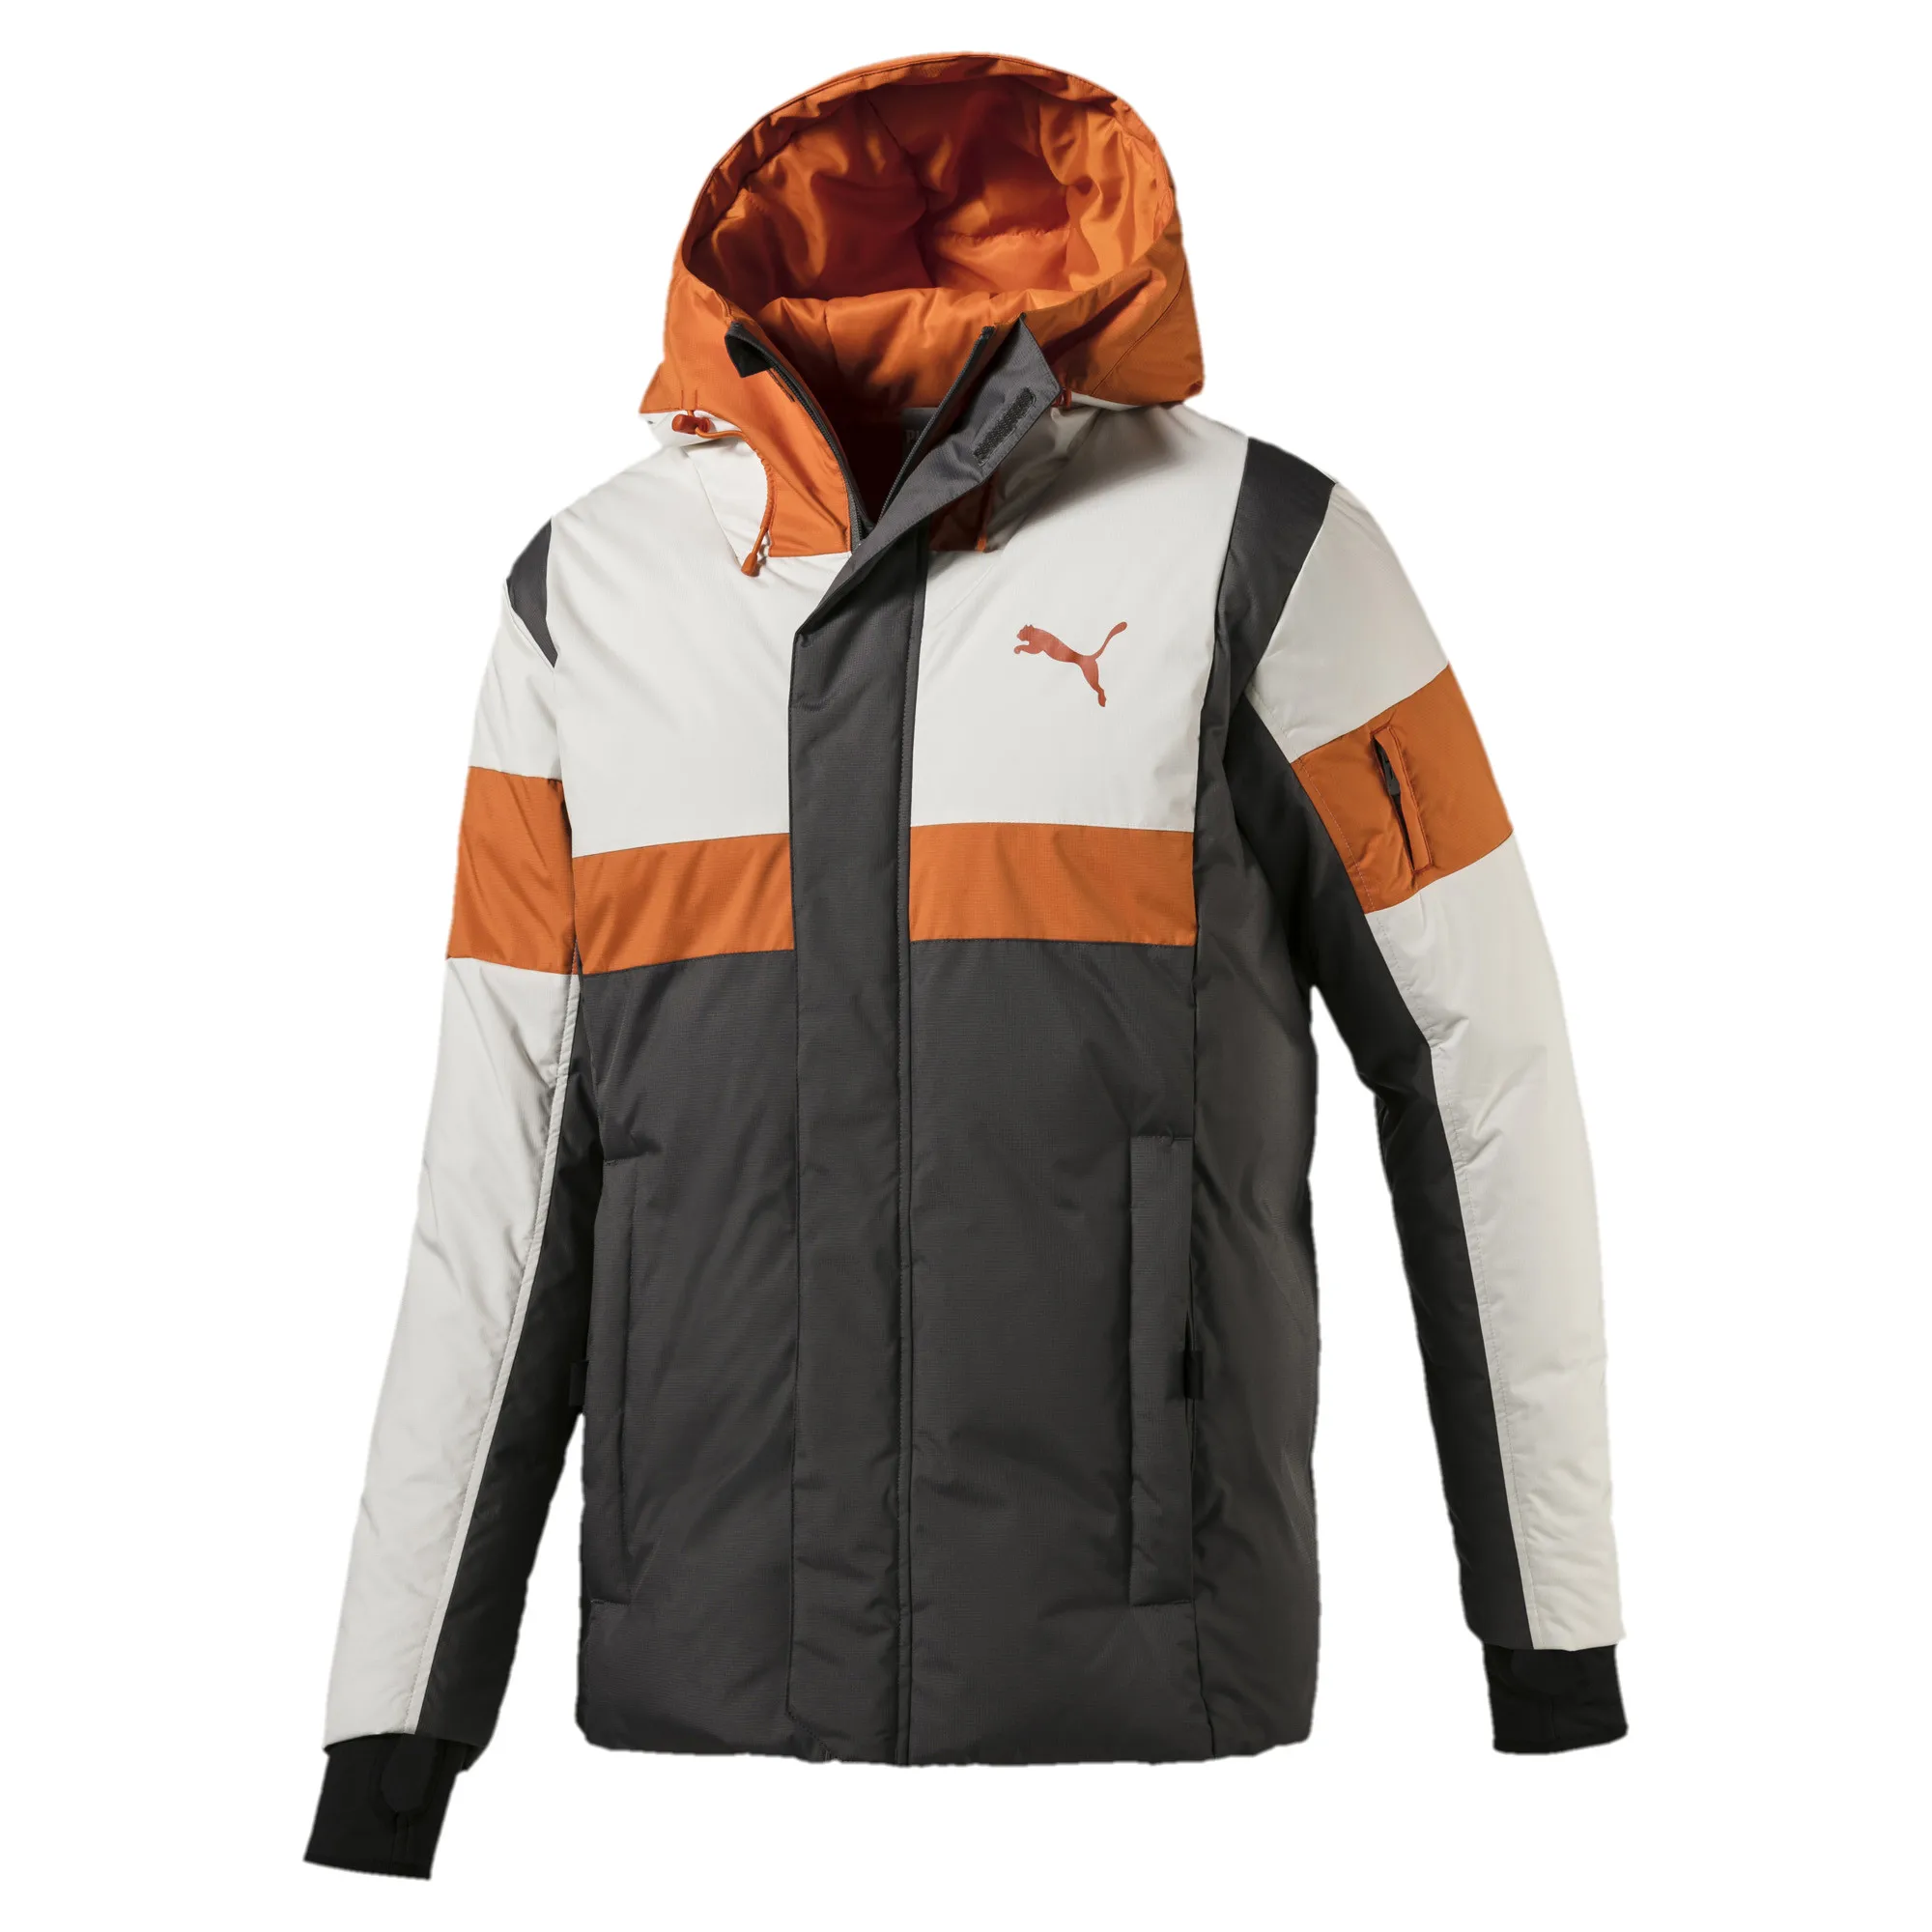 Jacket-PUMA-650-Protective-Down-Men-s-clothing-jackets-winter ...